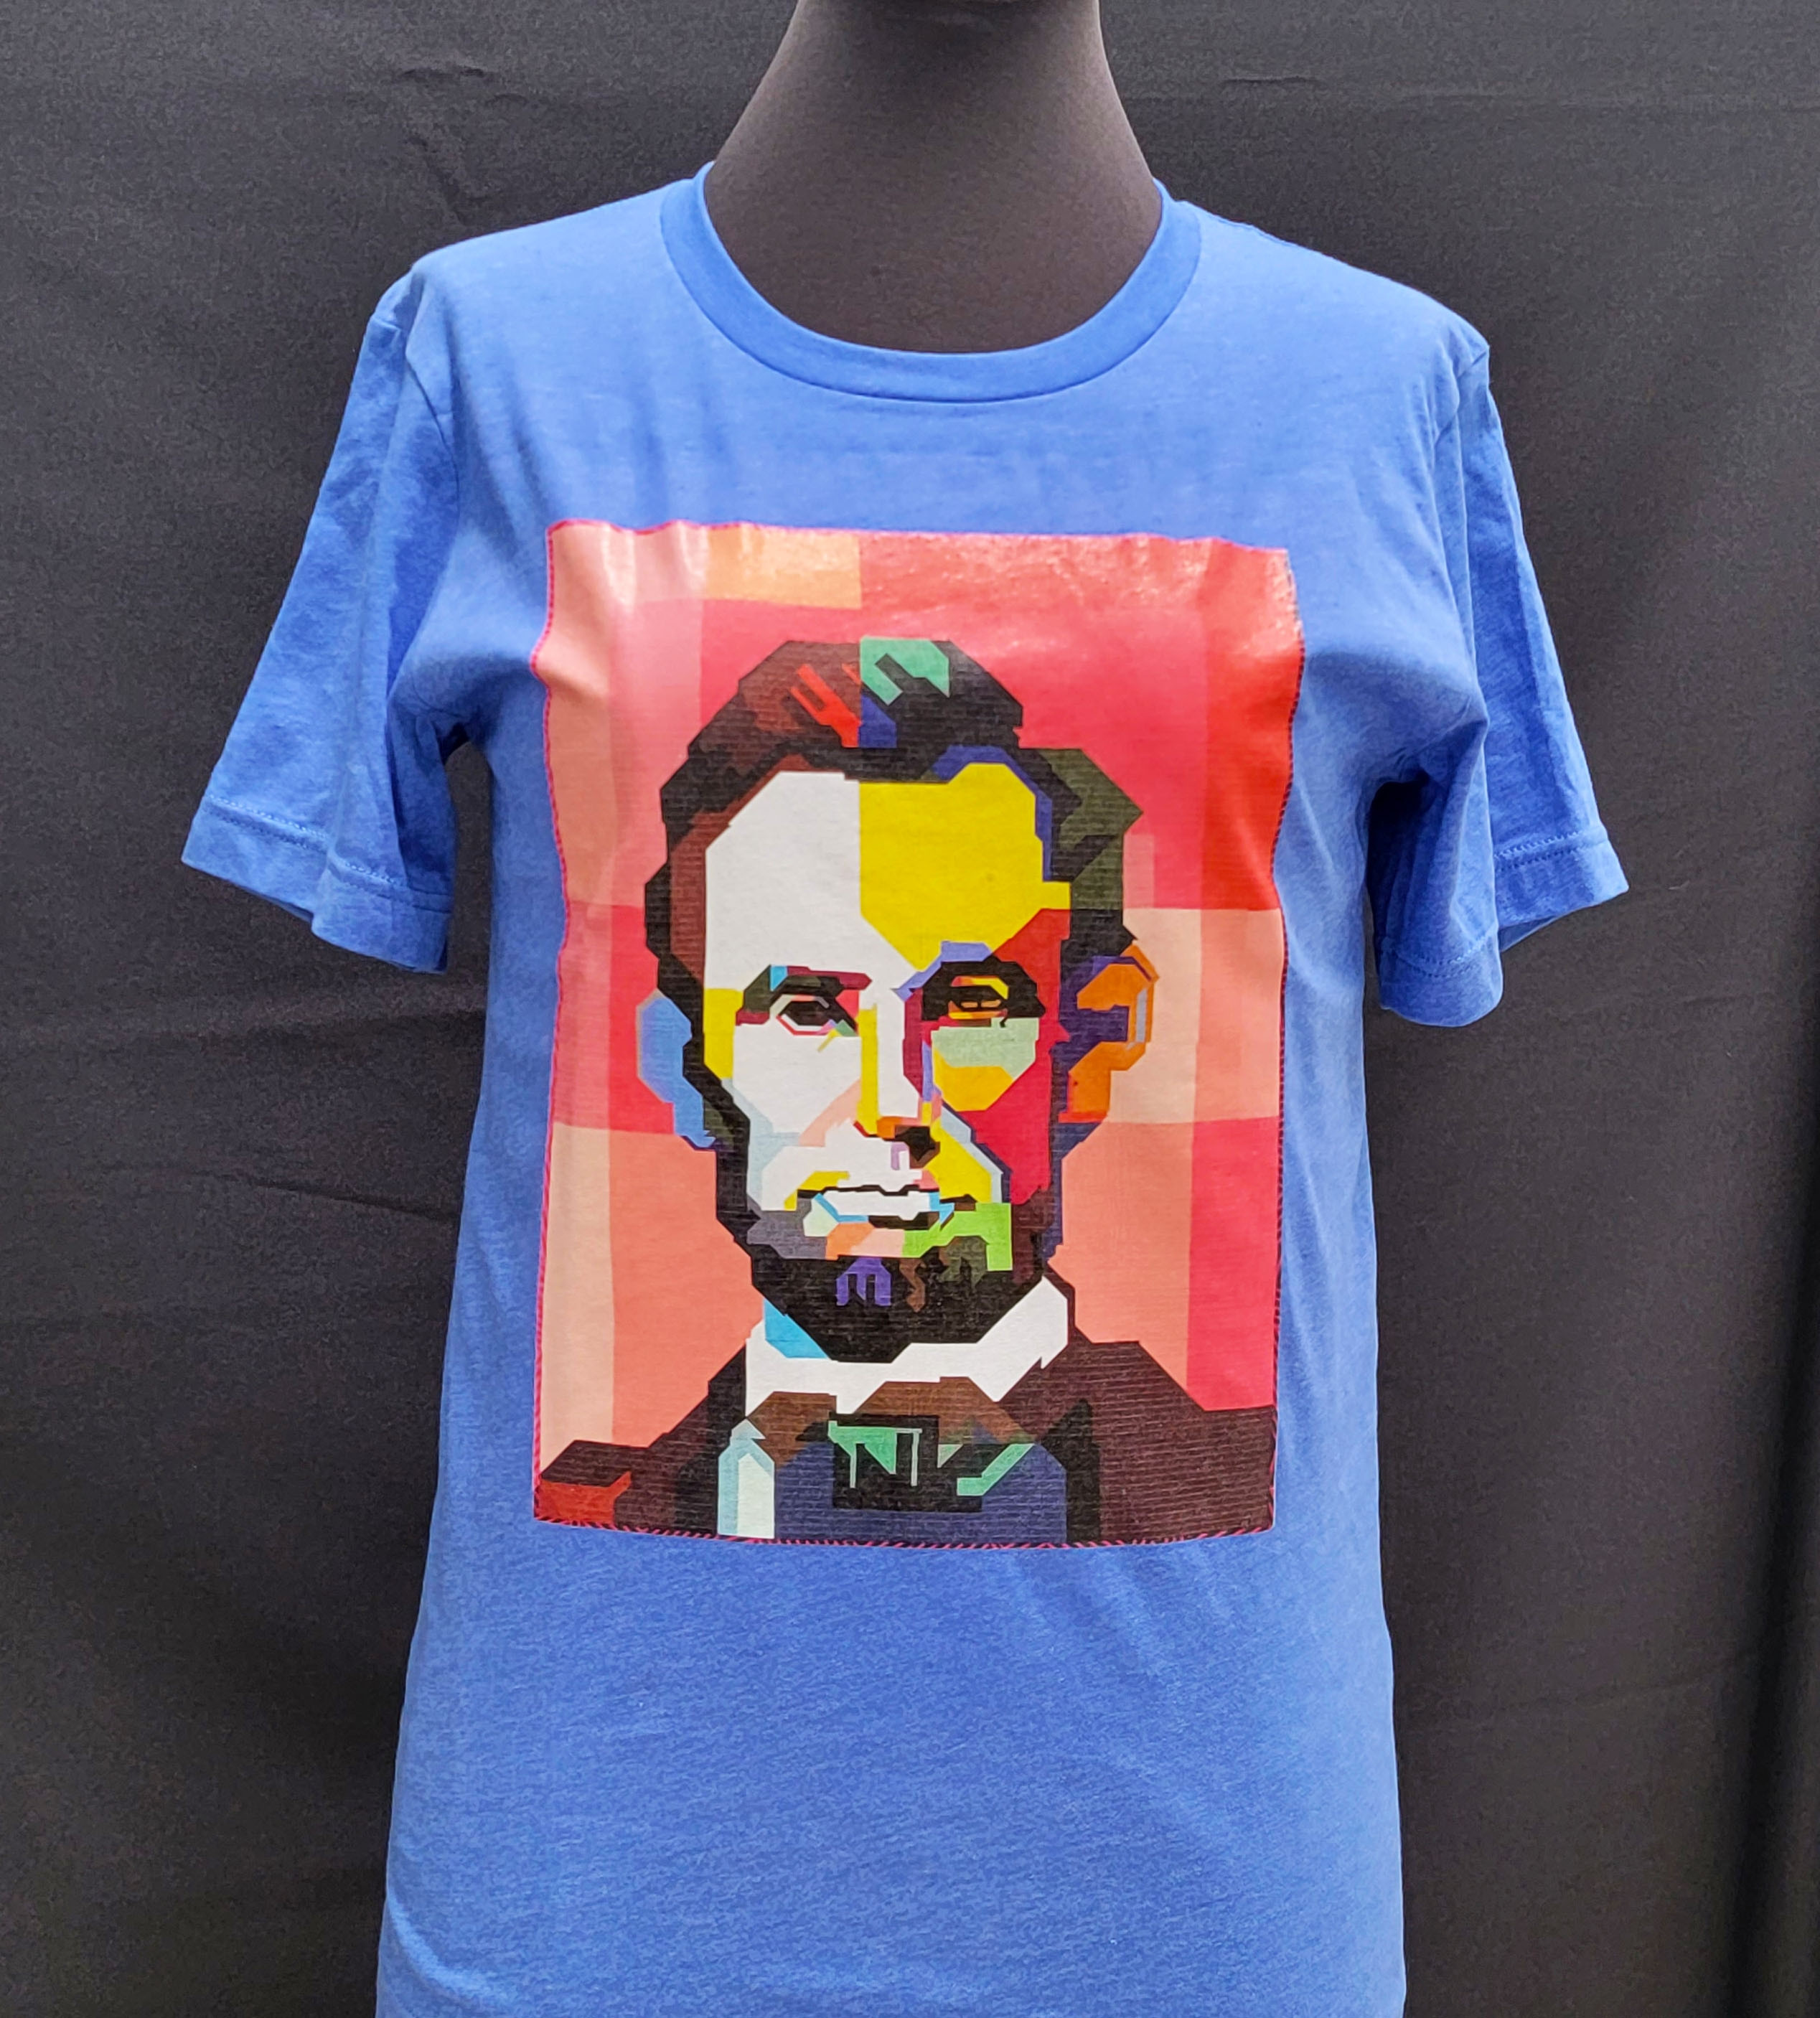 Lincoln T-shirt